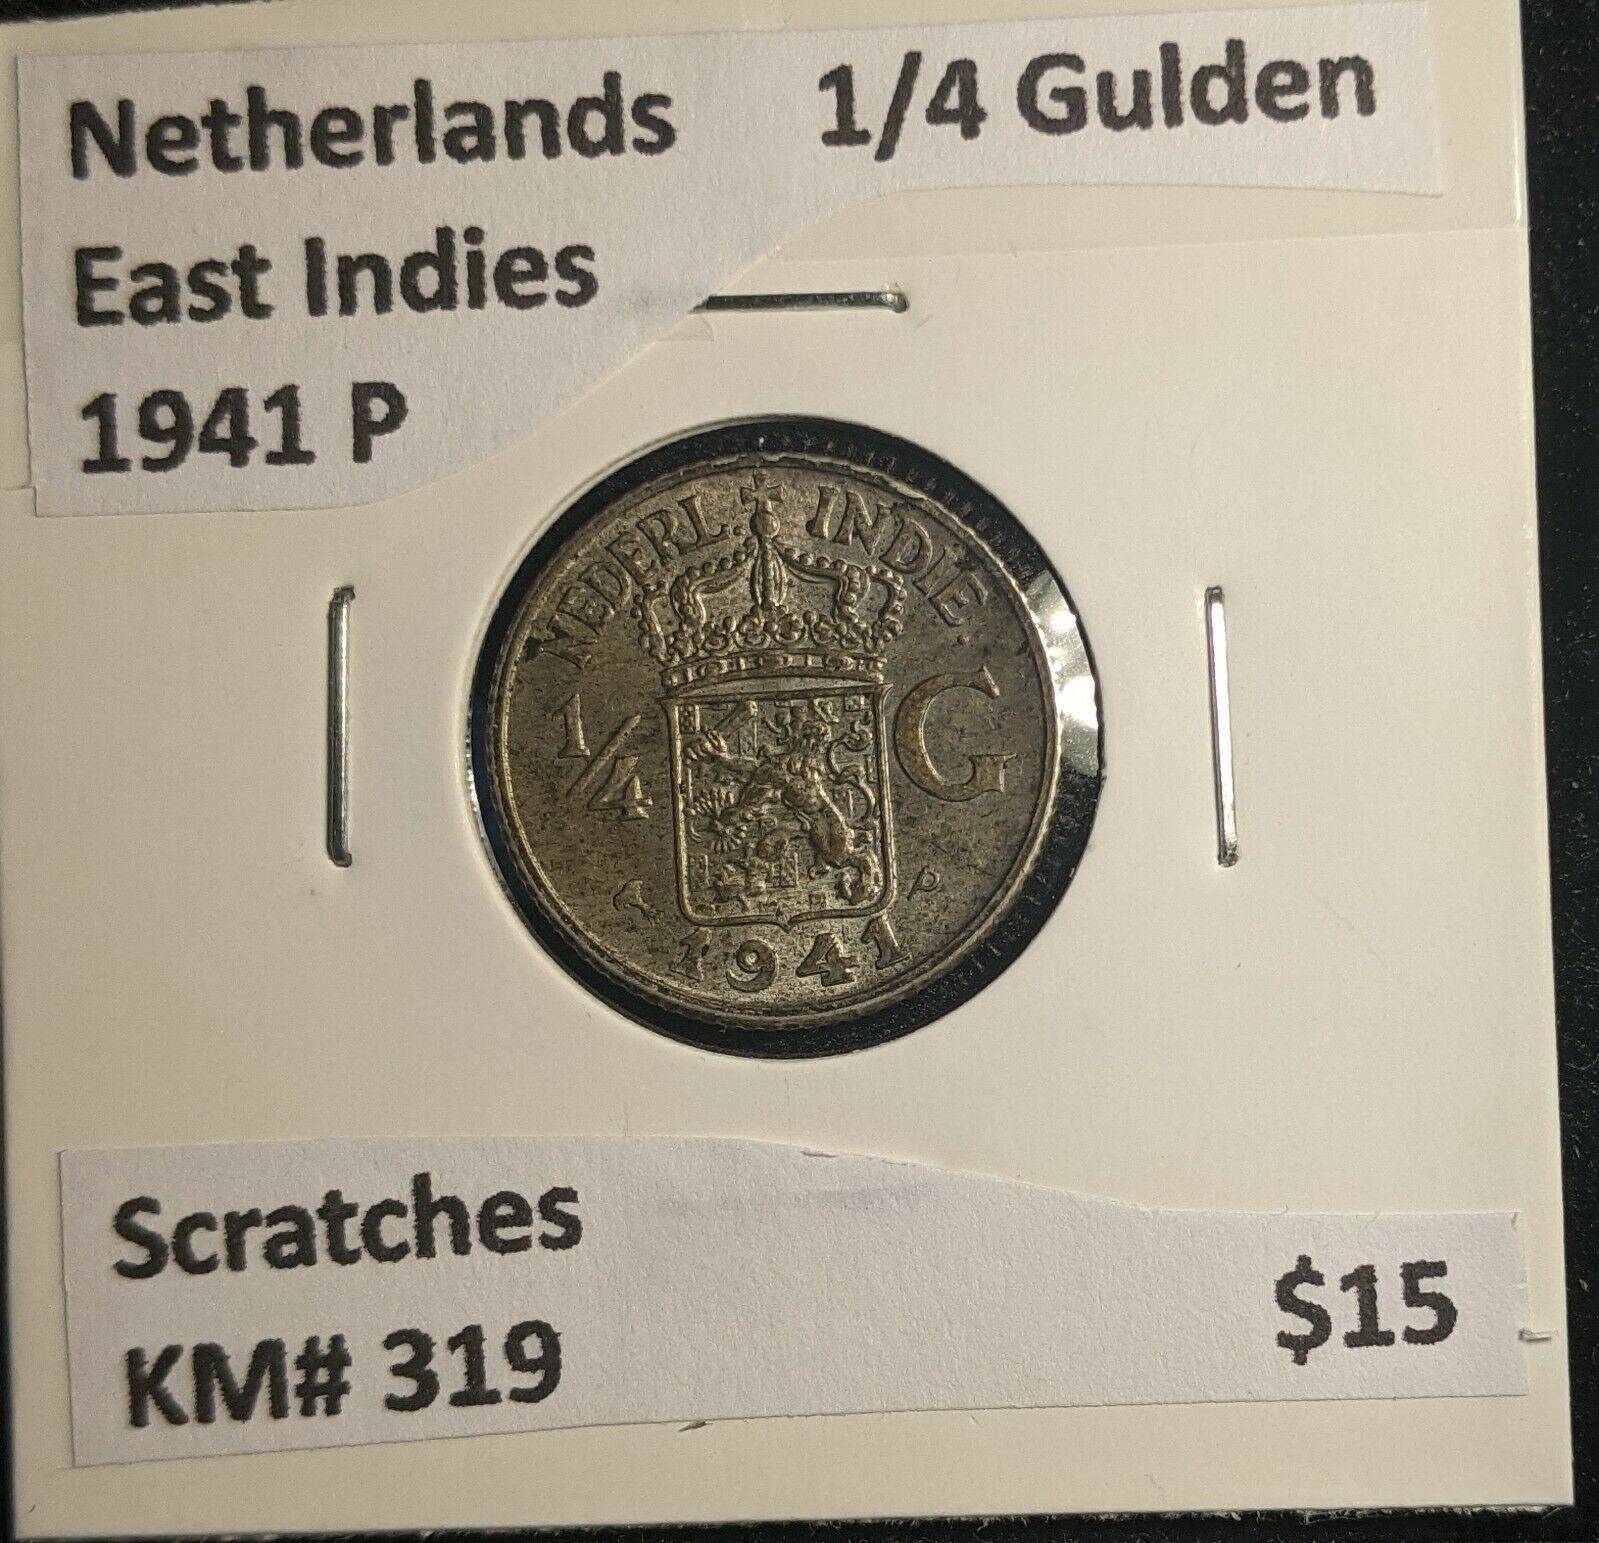 Netherlands East Indies 1941 P 1/4 Gulden KM# 319 Scratches #545 6B